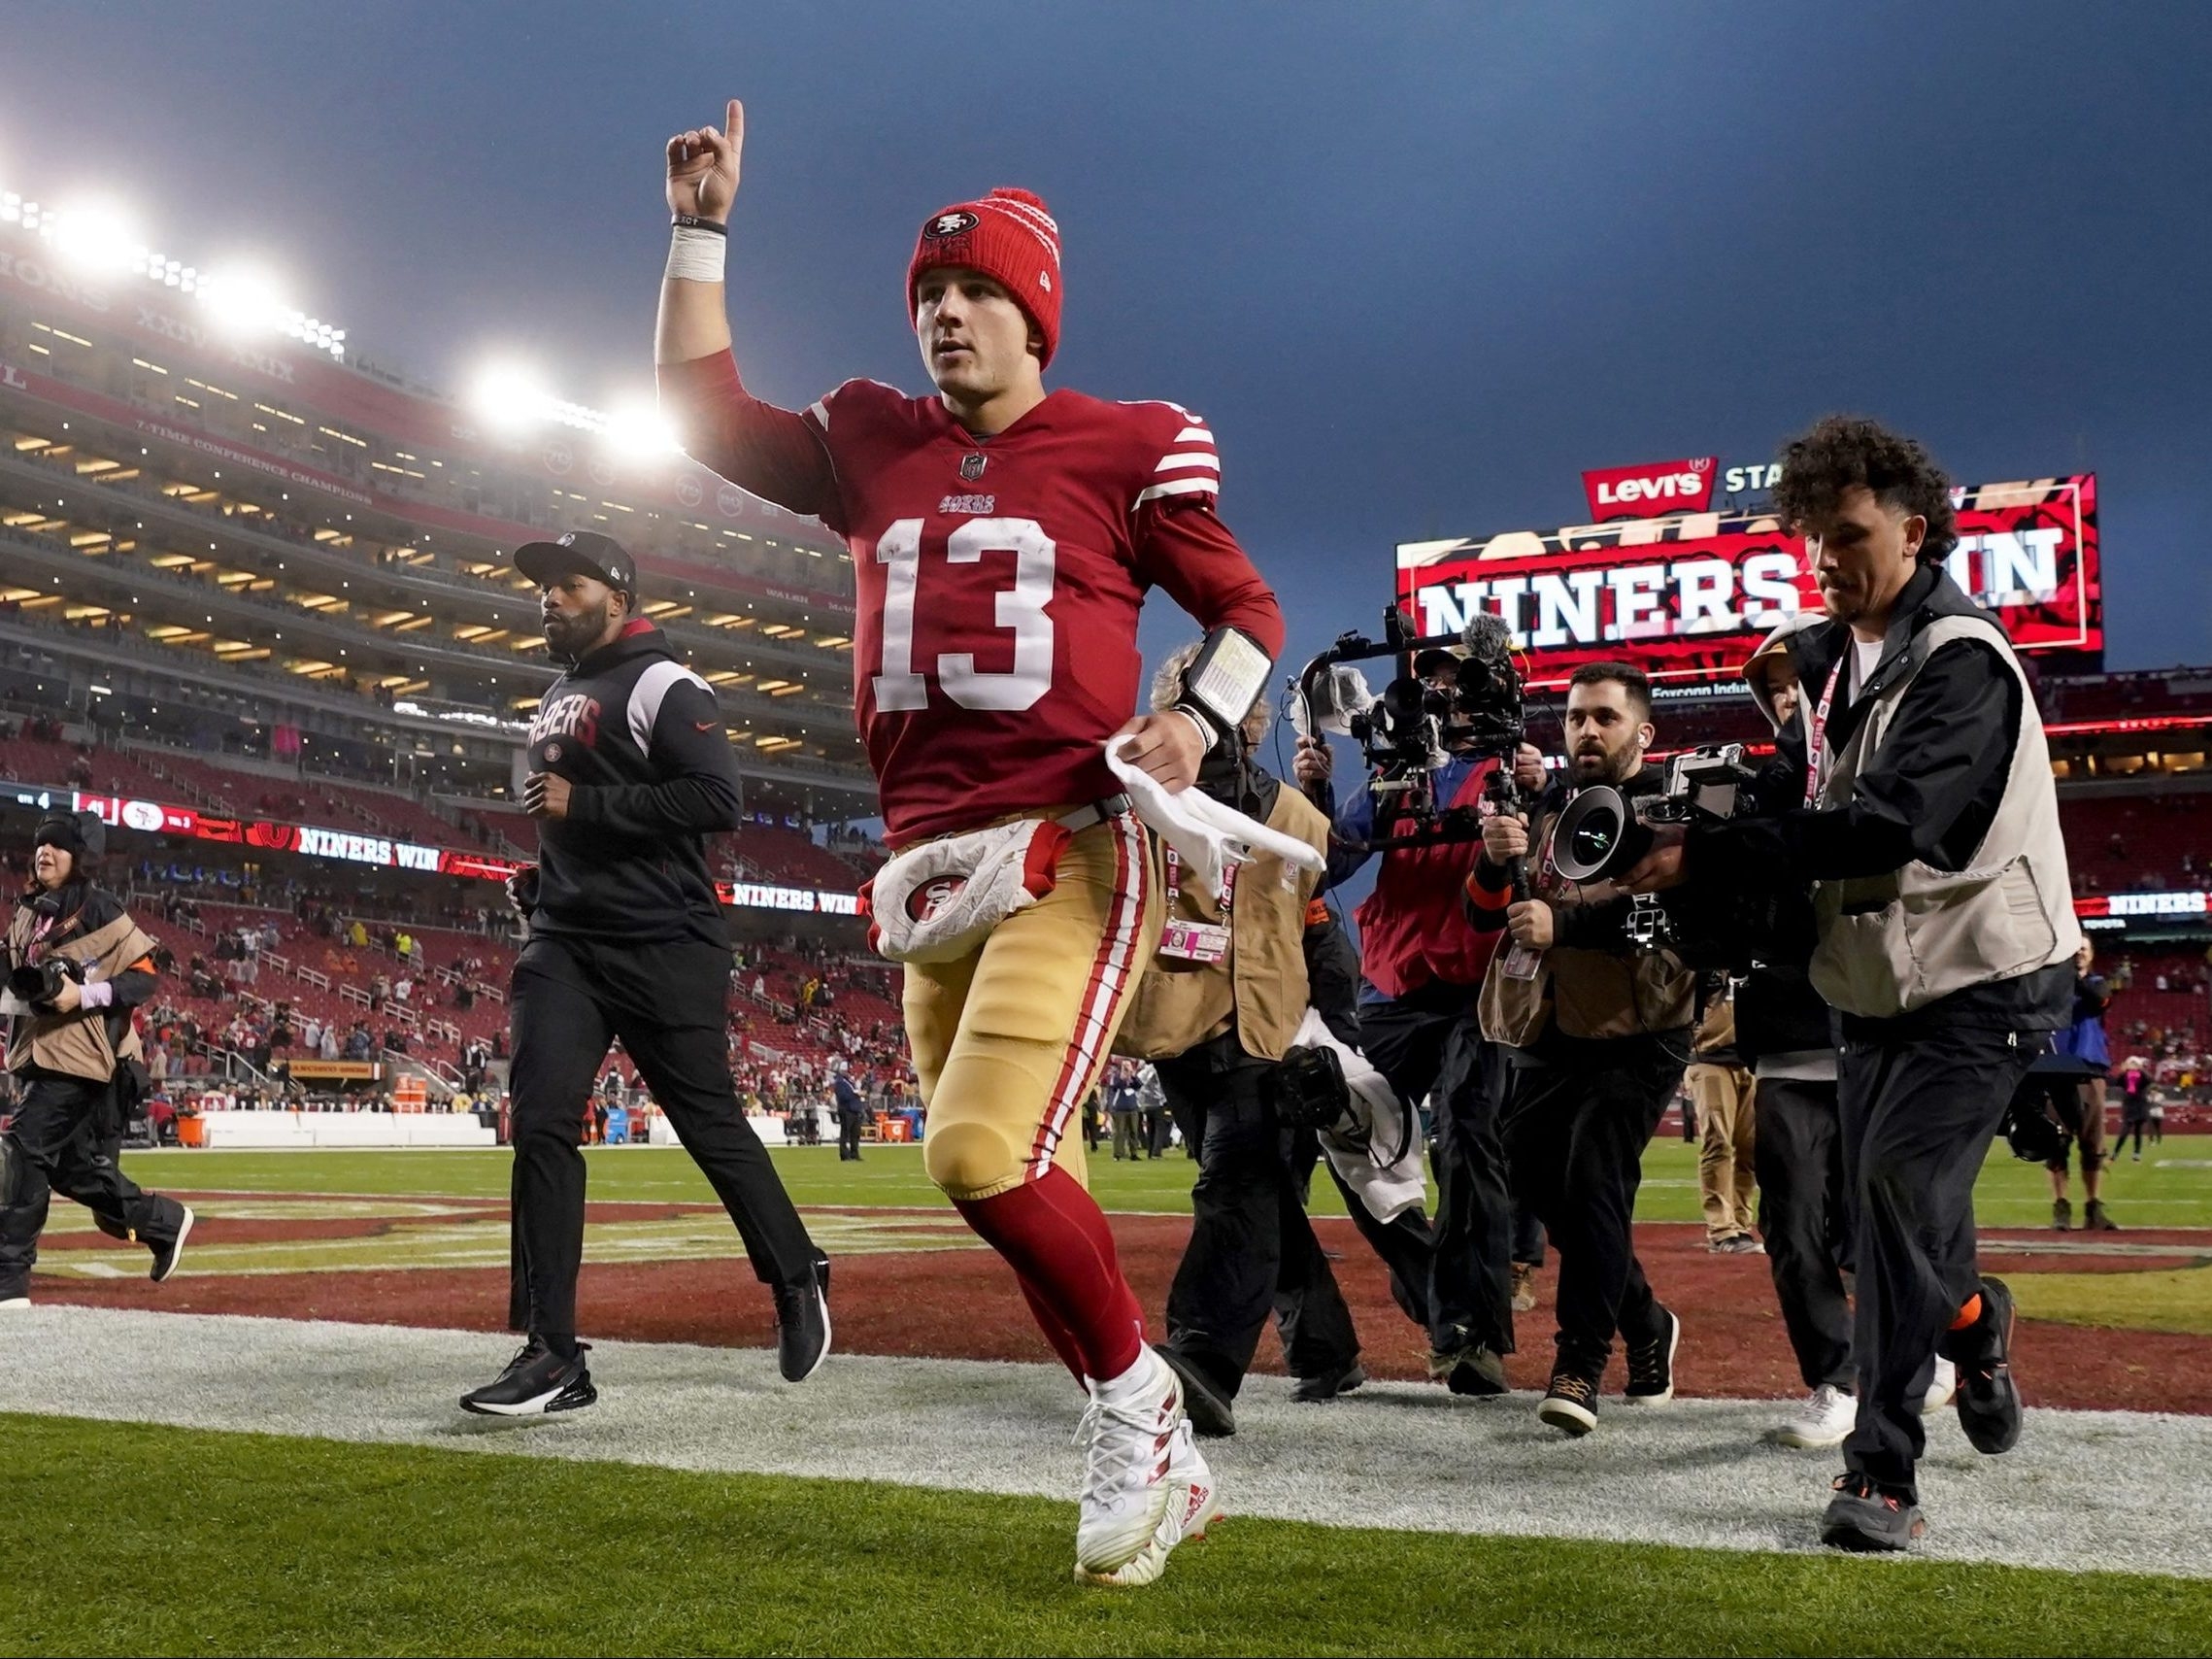 49ers jersey, merch sales skyrocket ahead of Super Bowl